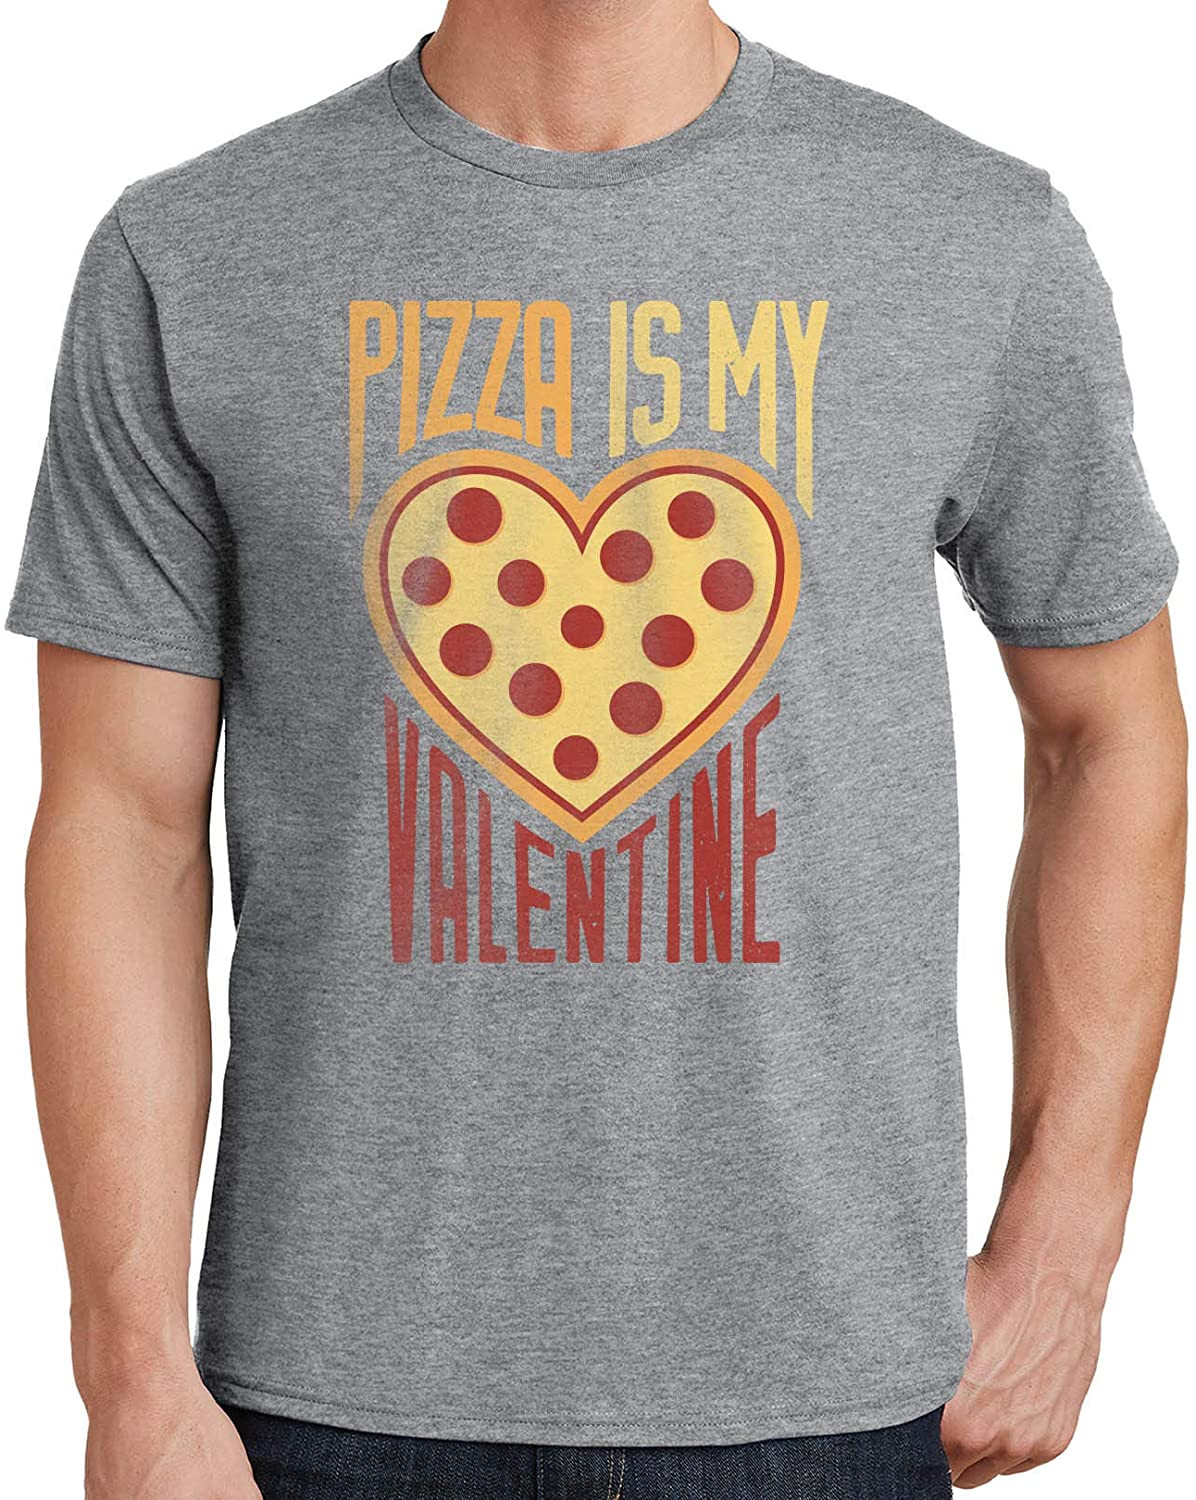 Pizza Is My Valentine T-Shirt